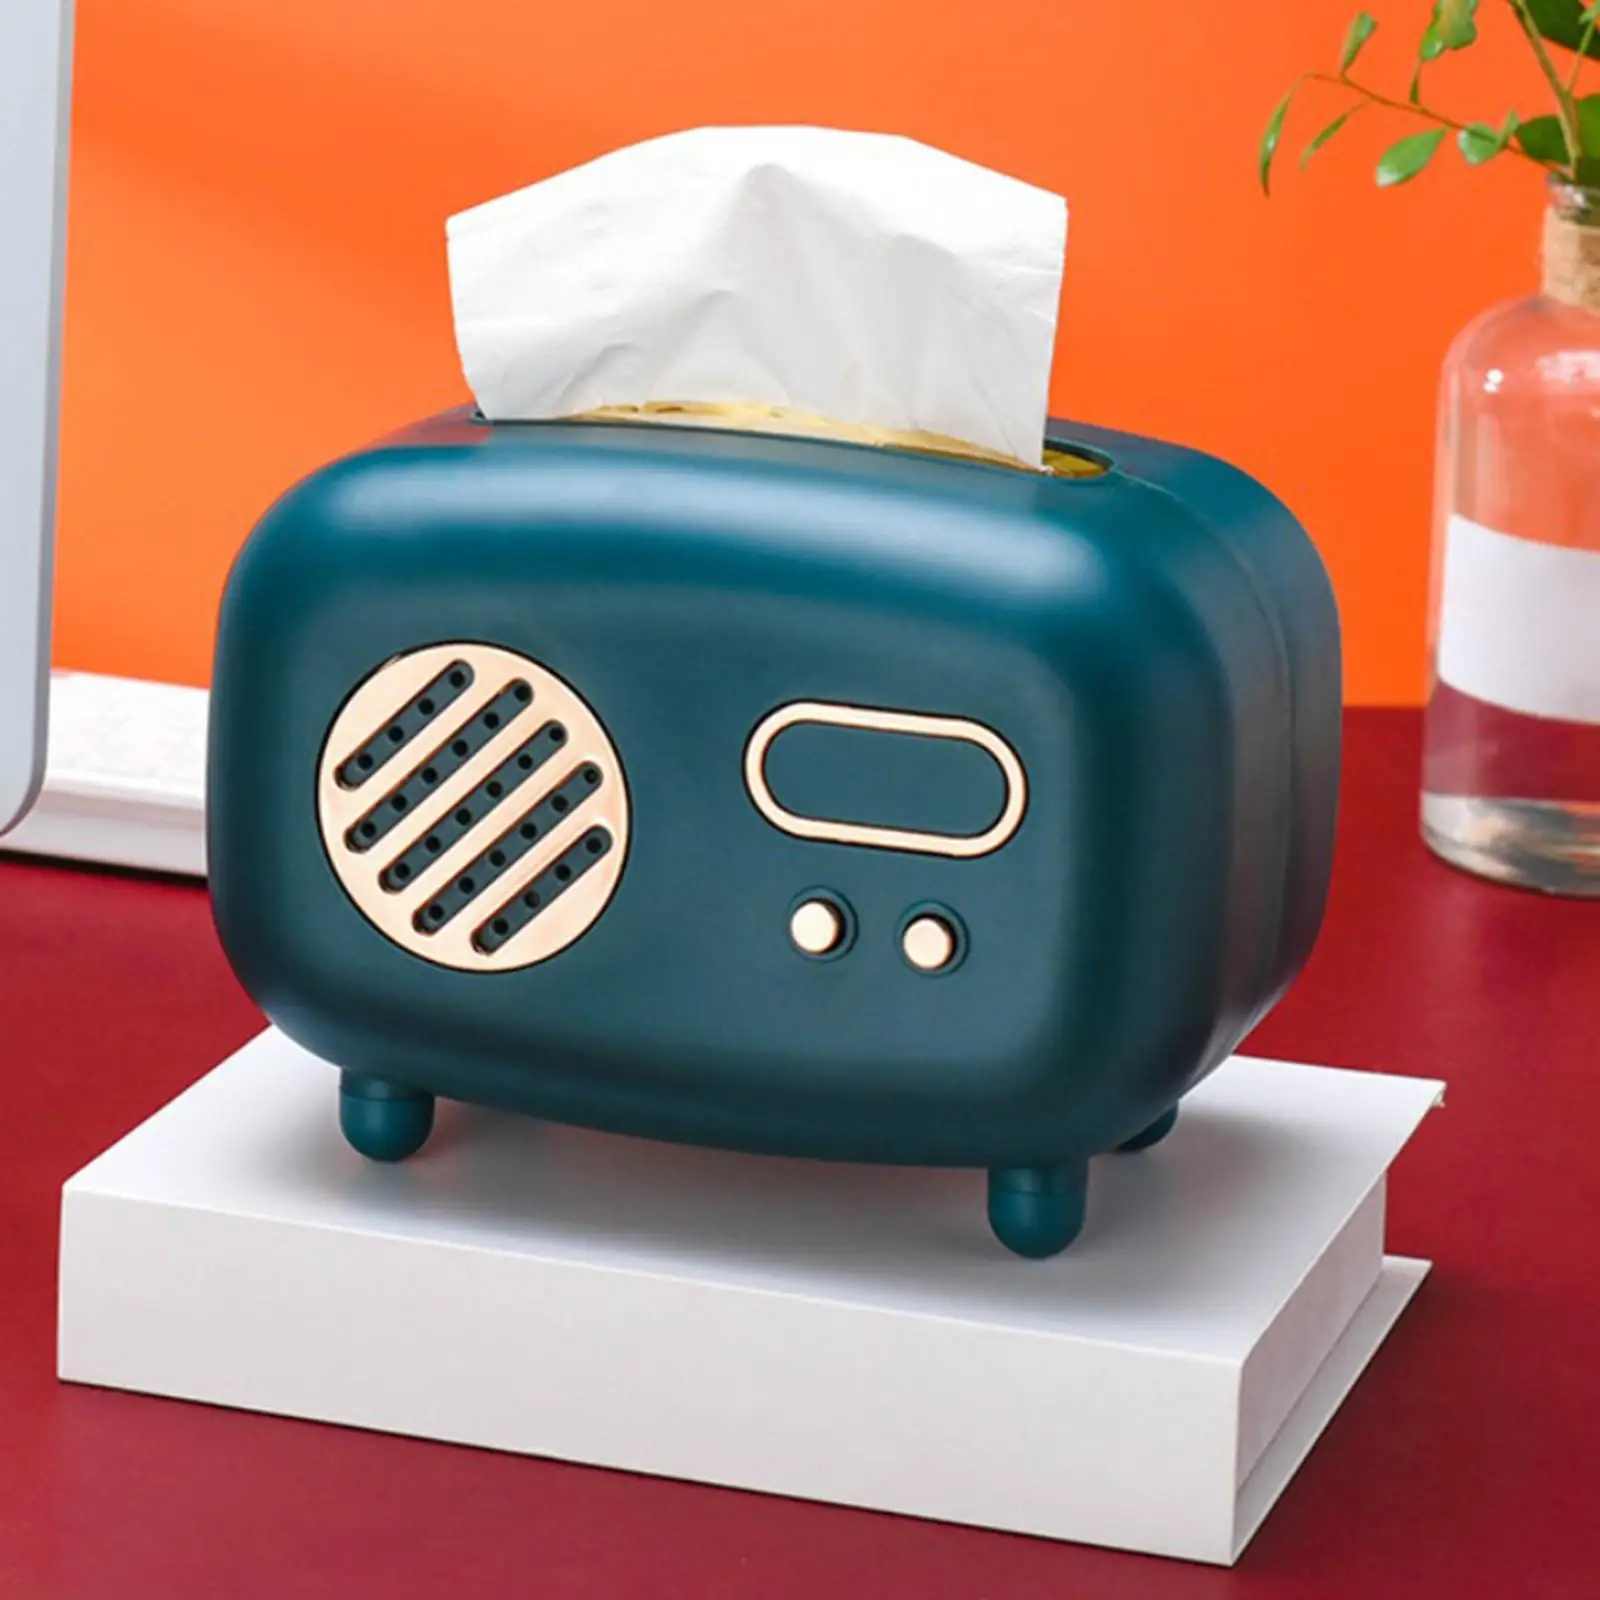 Radio Facial Tissue Box,Napkin Holder Paper Towel Dispenser Container for Bedroom,Car,Office,Restaurant,Desk